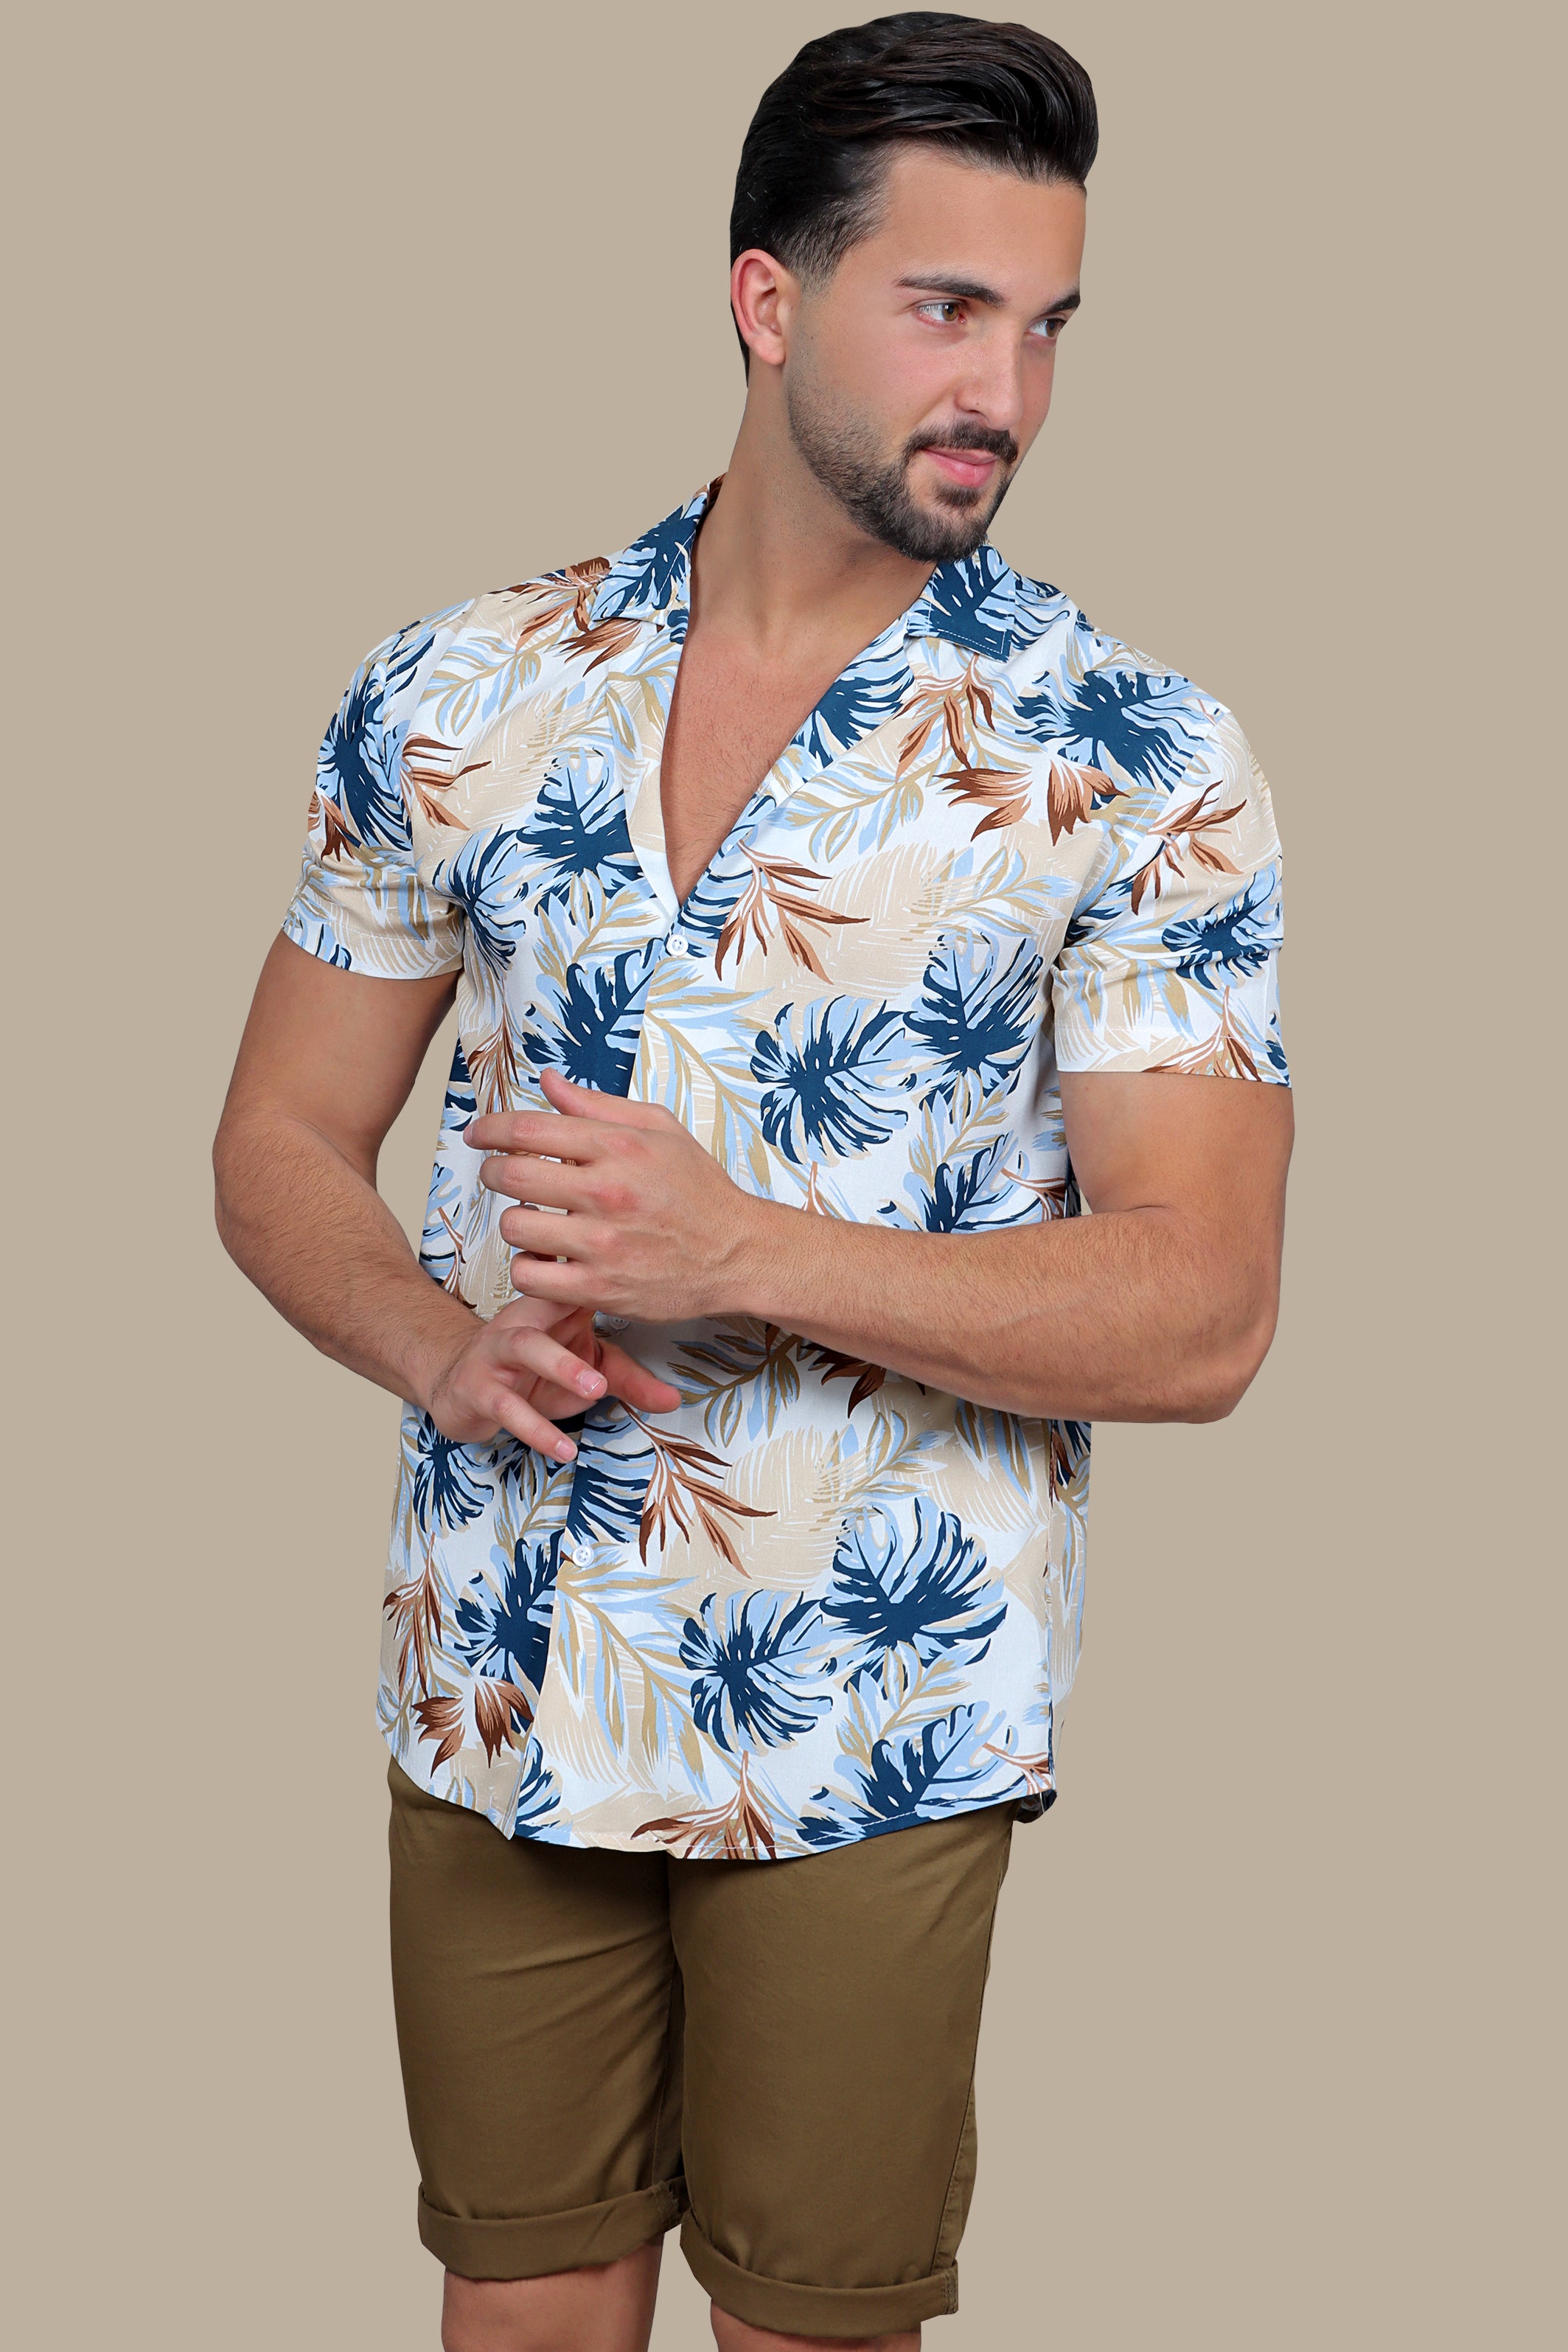 Island Breeze: Light Blue Hawaii Shirt with Leaves Prin